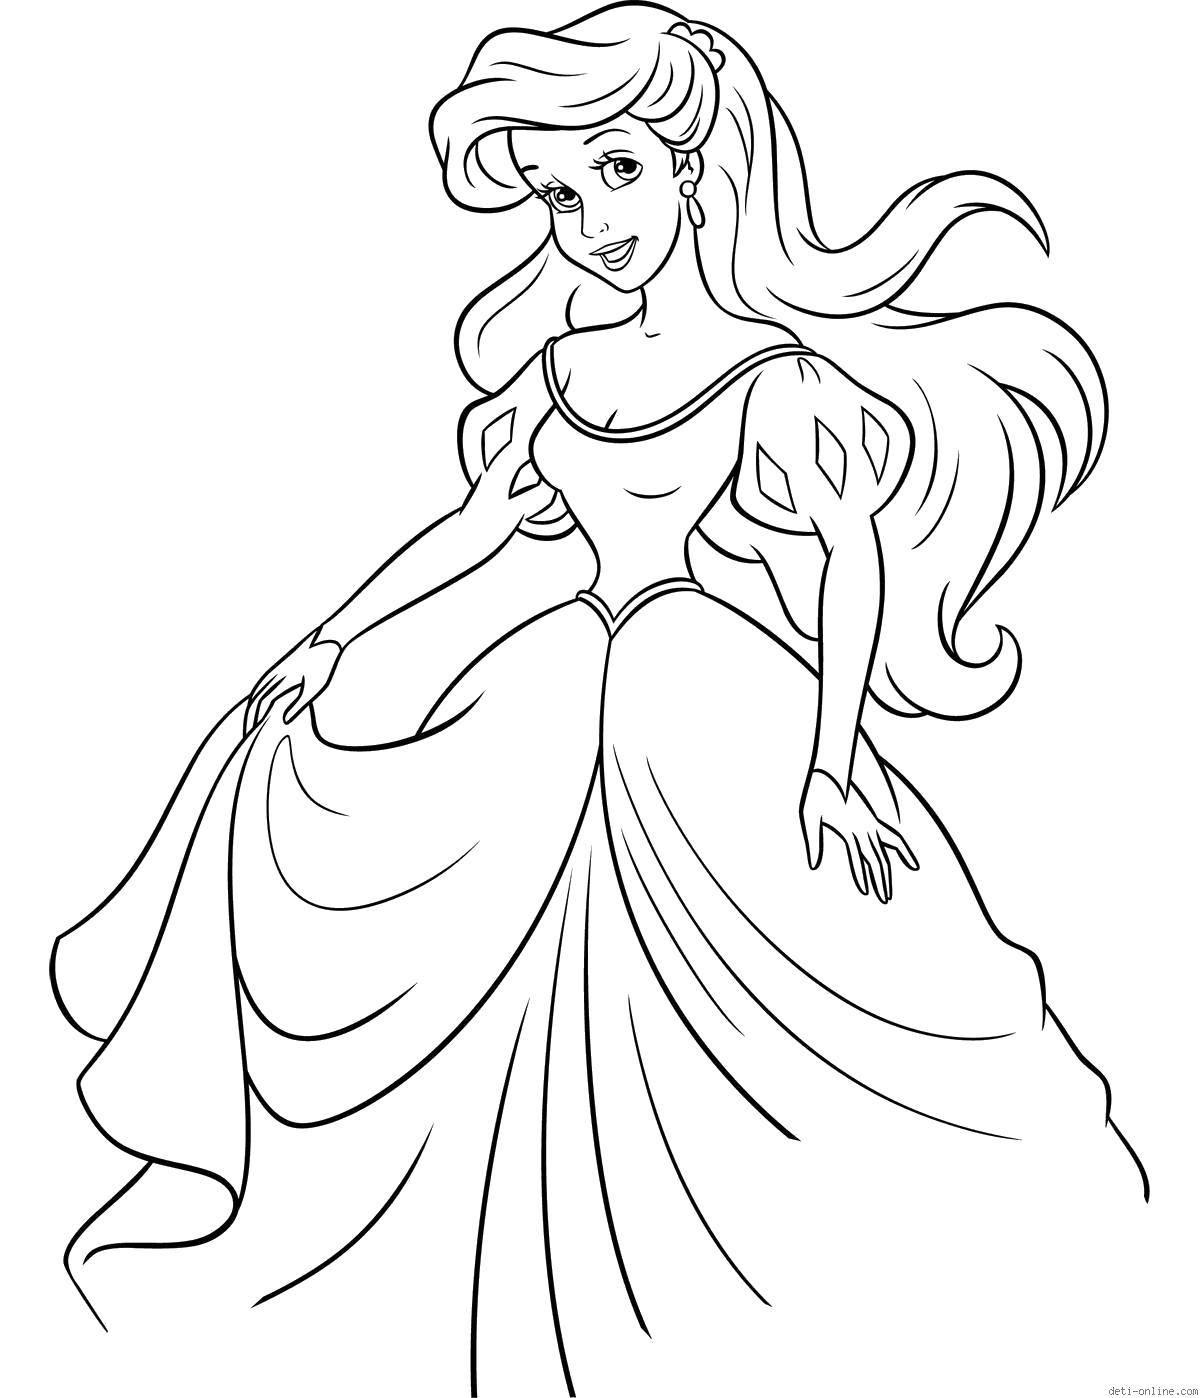 Coloring Ariel in a beautiful dress. Category the little mermaid. Tags:  Disney, the little mermaid, Ariel.